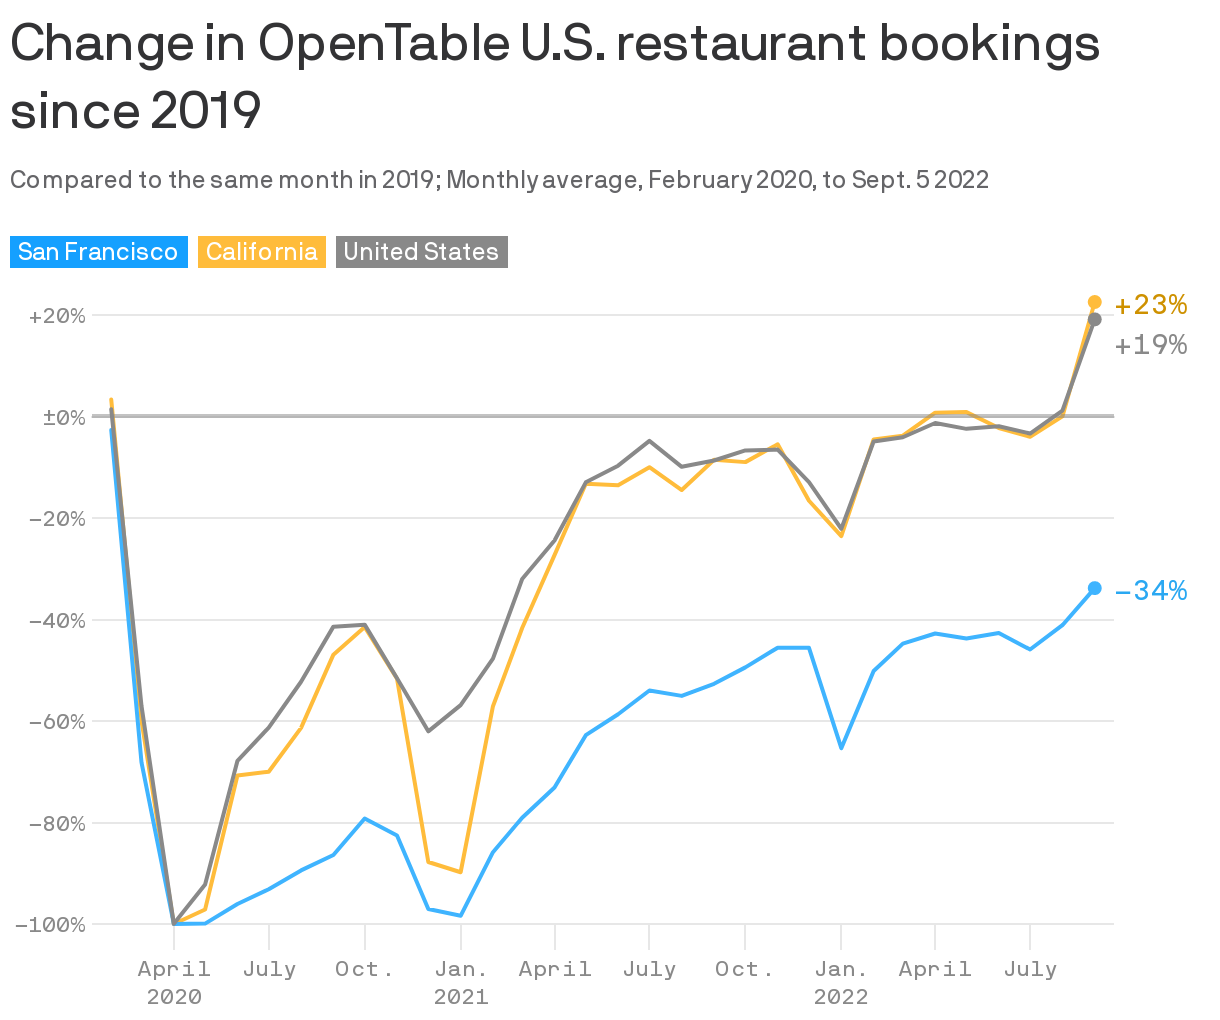 Change in OpenTable U.S. restaurant bookings since 2019